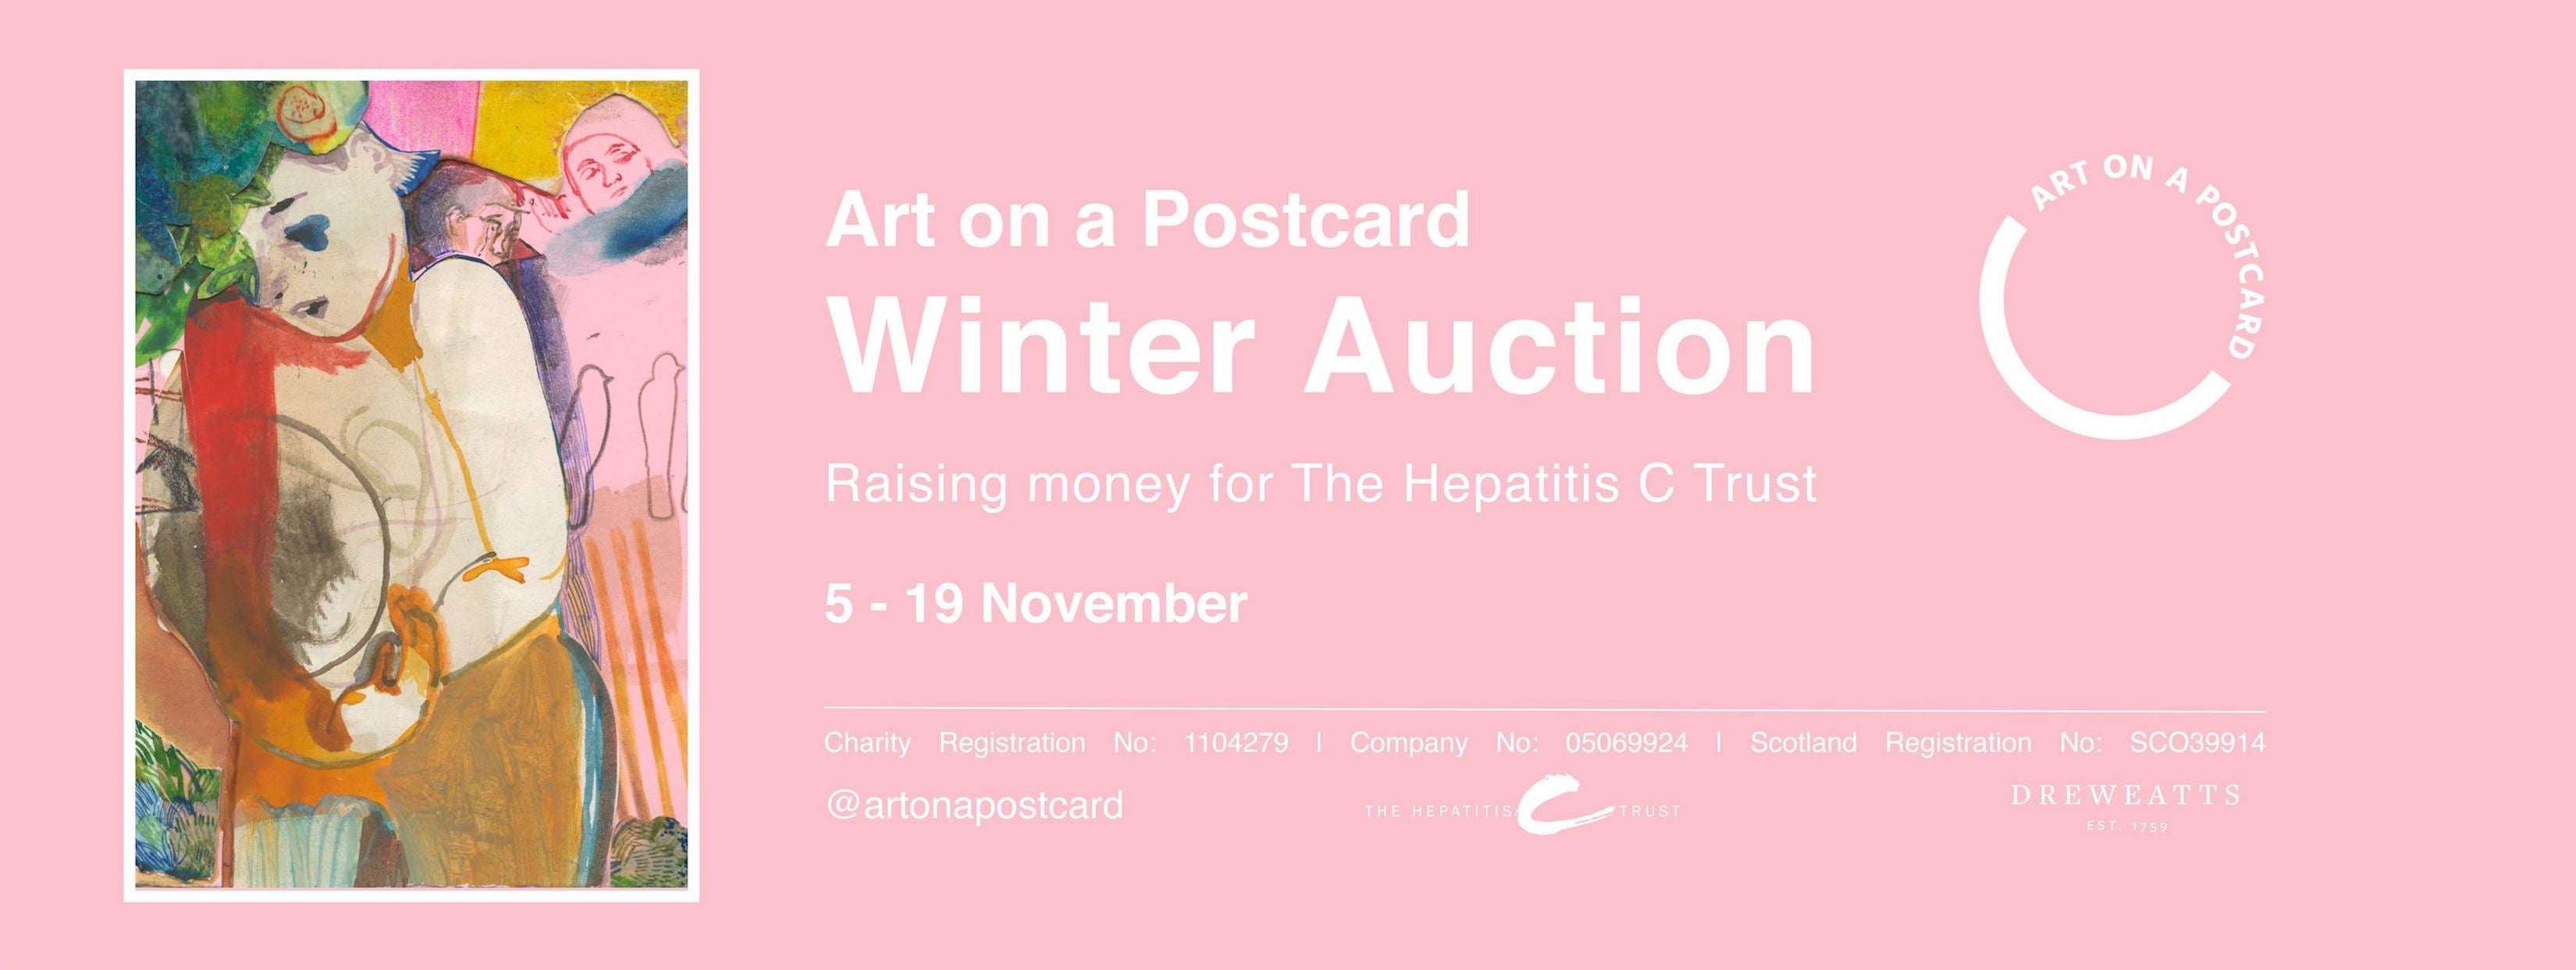 Art on a Postcard (AoaP) Winter Auction 2020 banner image